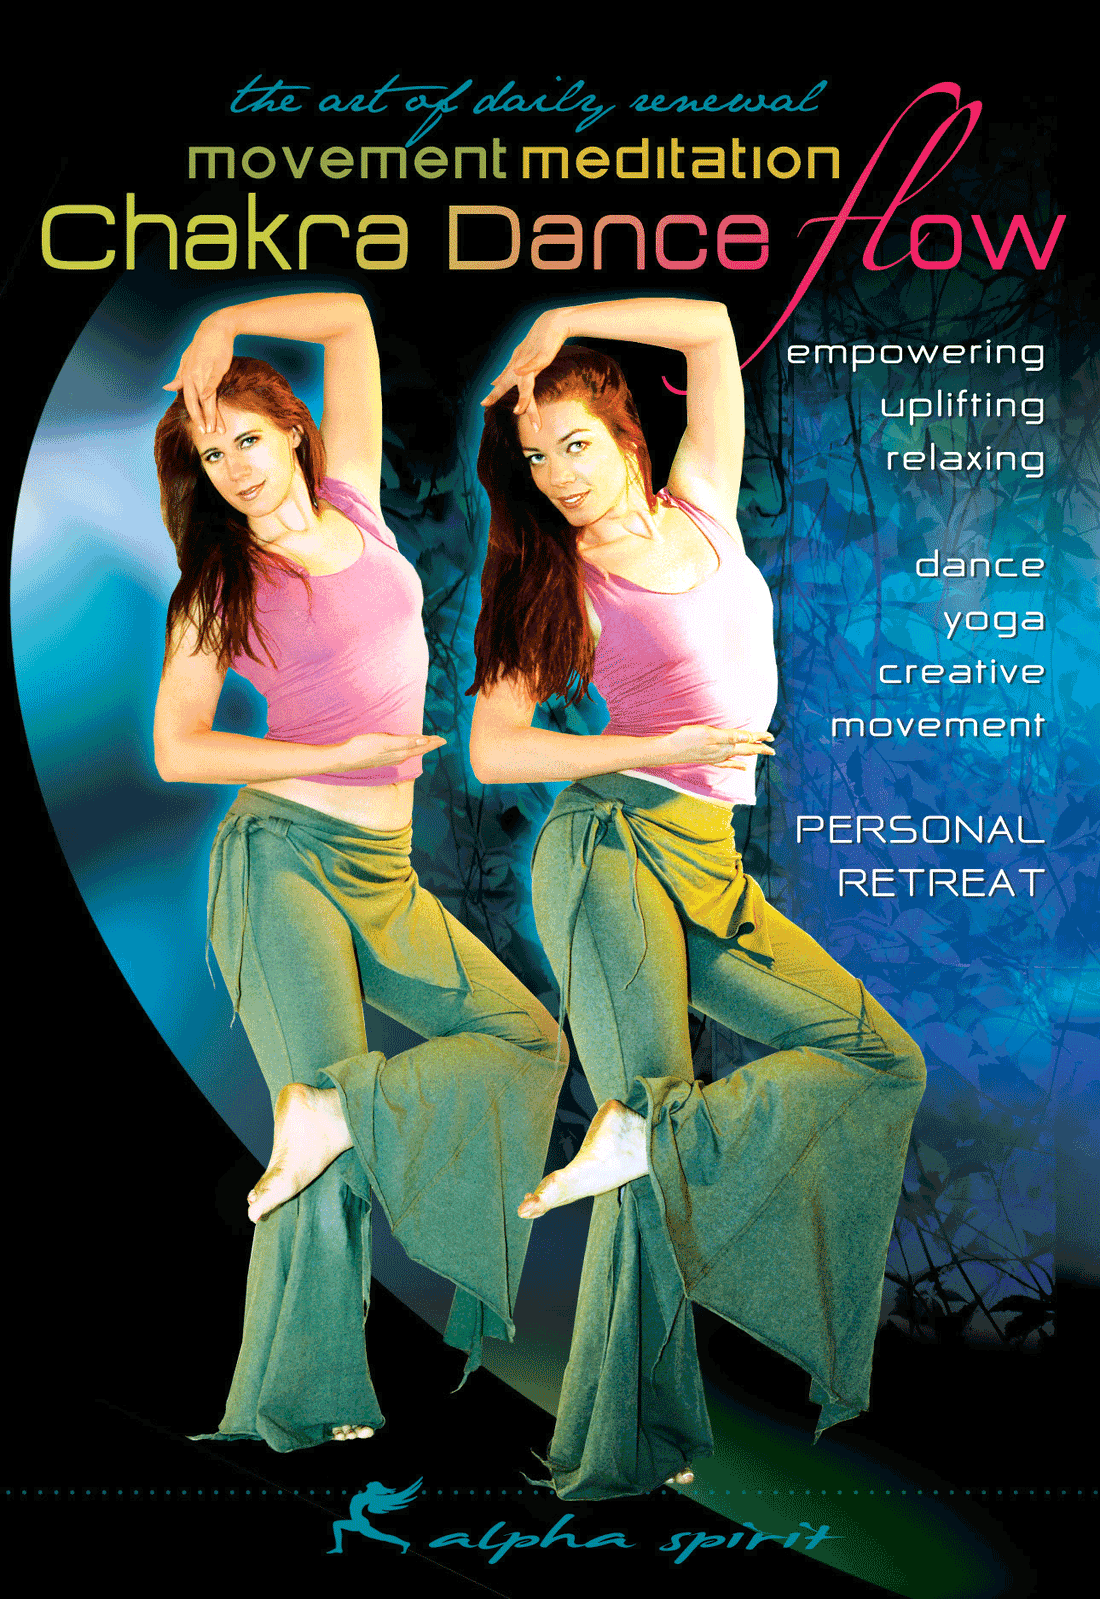 Chakra Dance Flow: Movement Meditation with Darshan and Mariyah - INSTANT VIDEO / DVD - World Dance New York